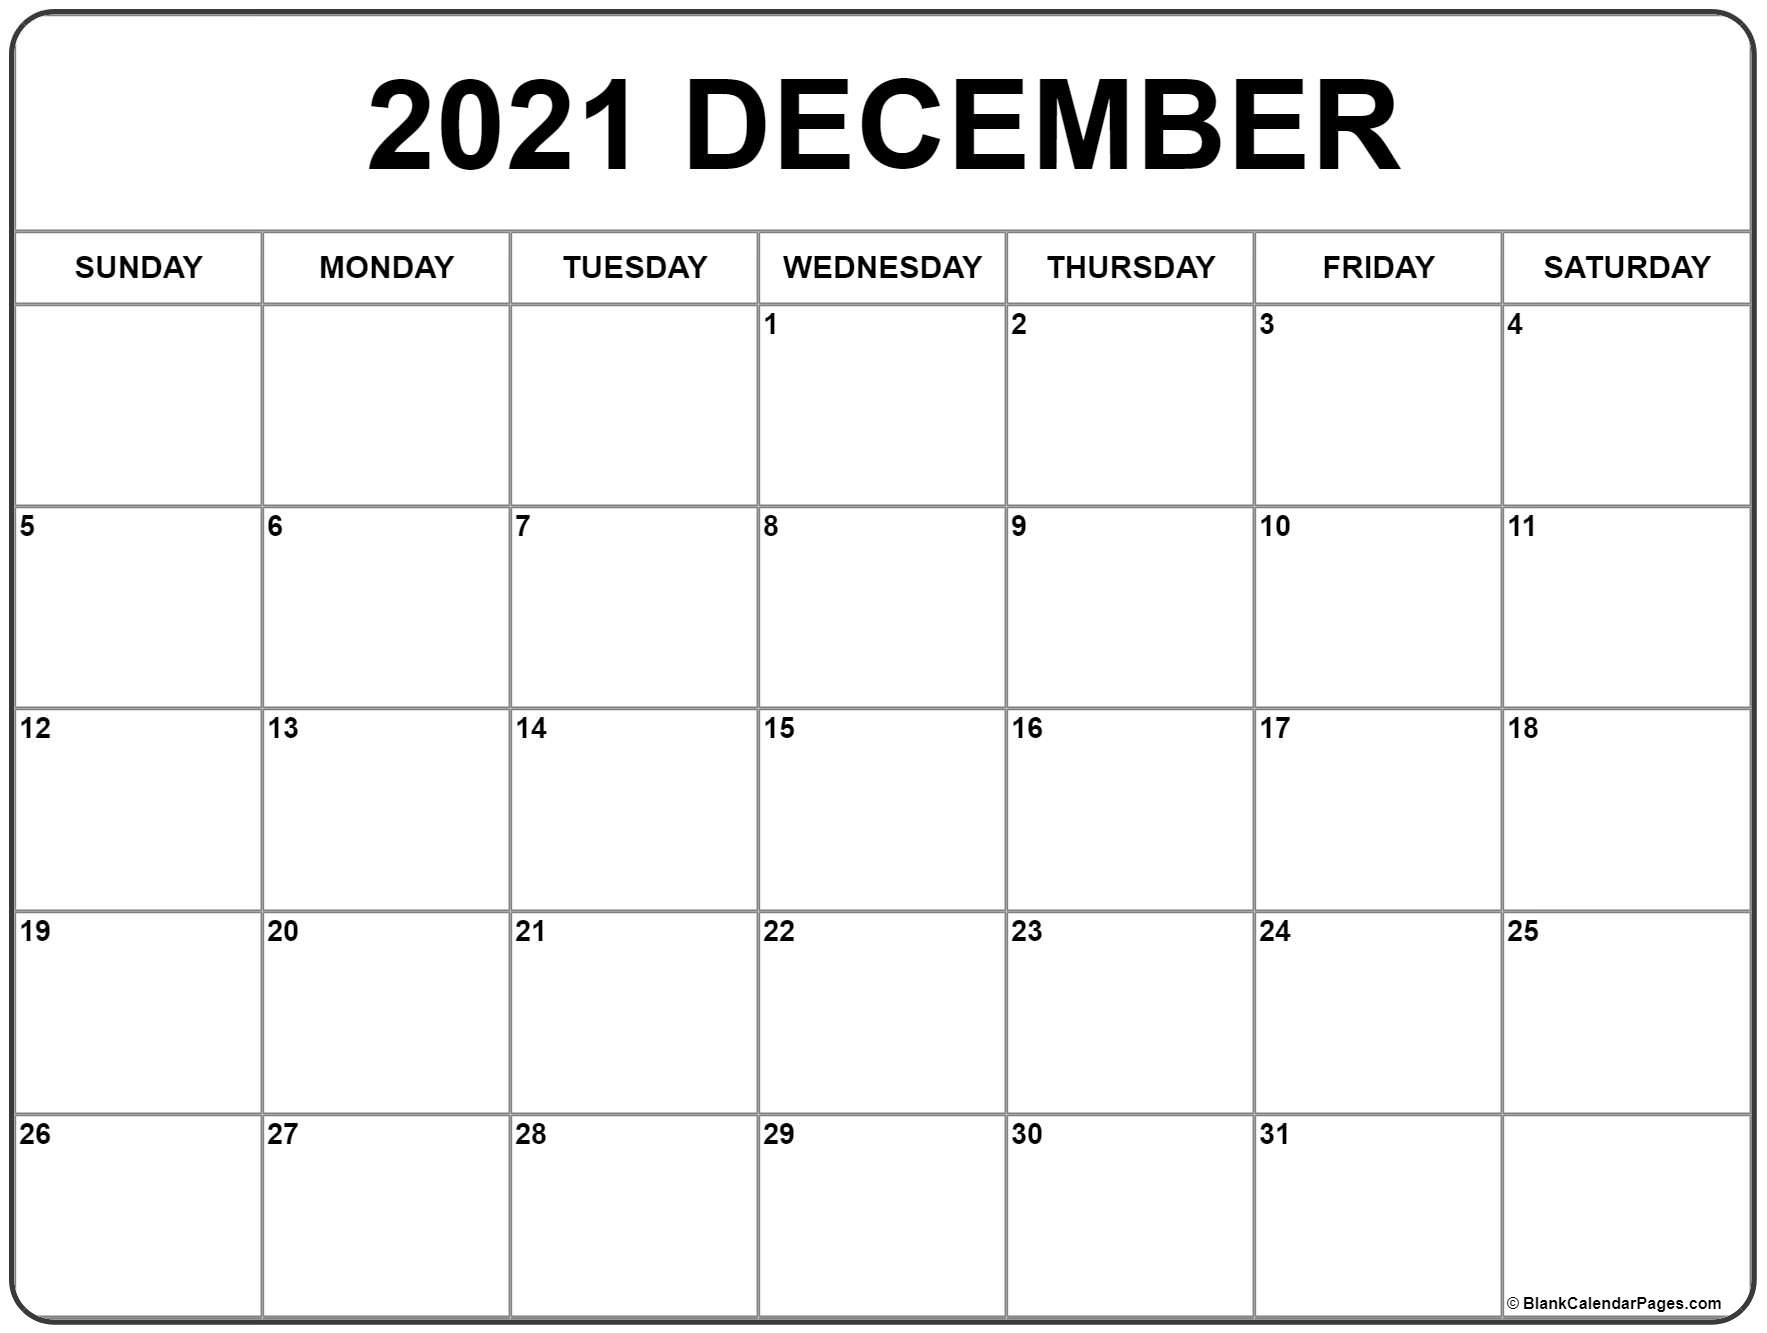 December 2021 Calendar | Free Printable Monthly Calendars-2021 Calendar Free Printable Bills